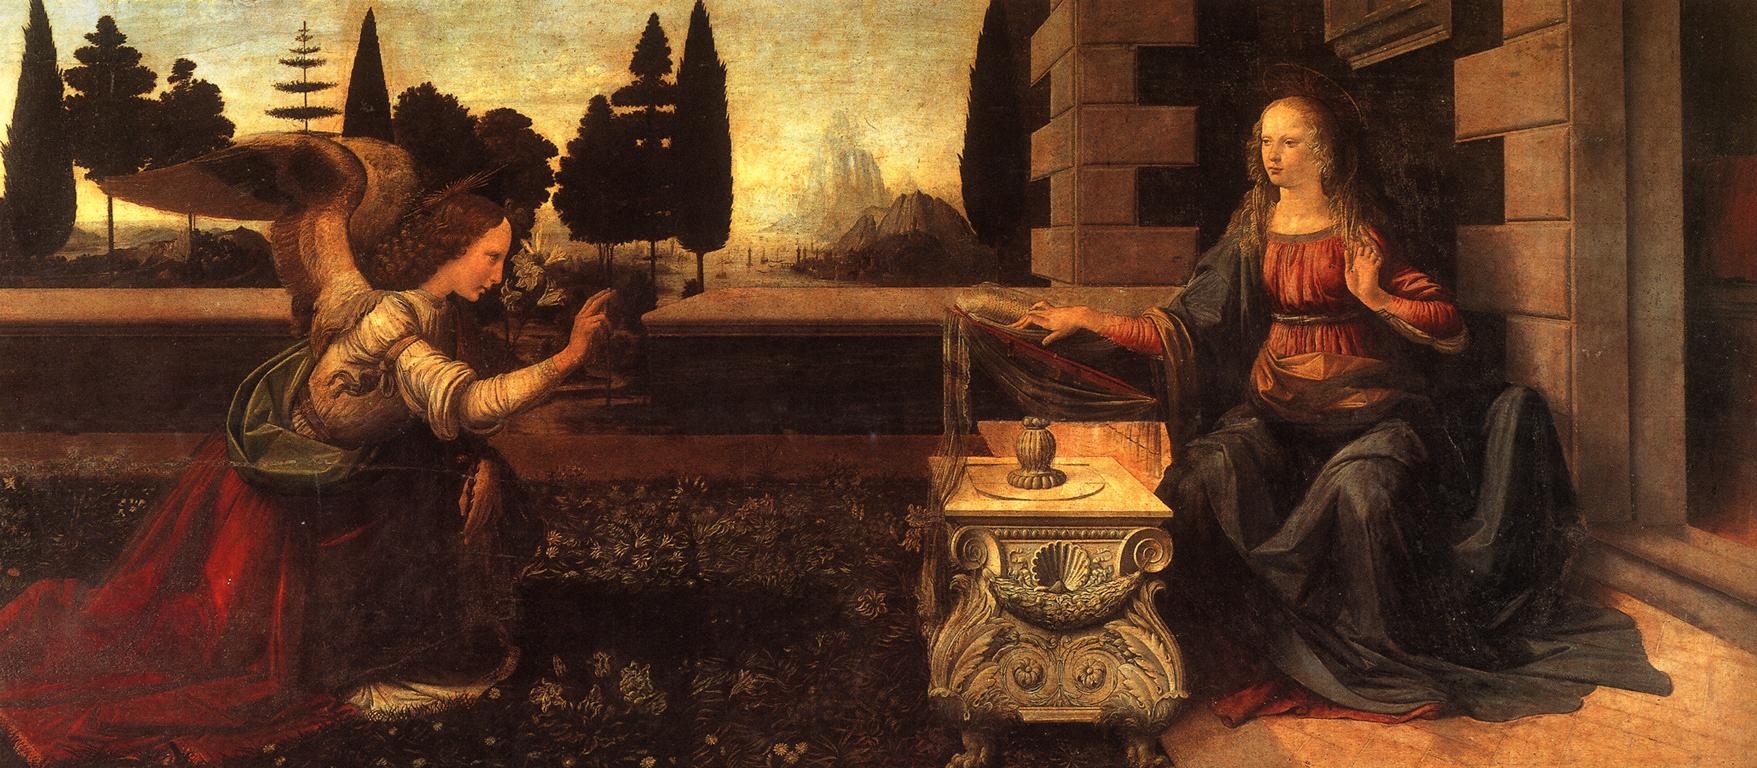 Buna Vestire by Leonardo da Vinci - c. 1472 - 217 x 98 cm 